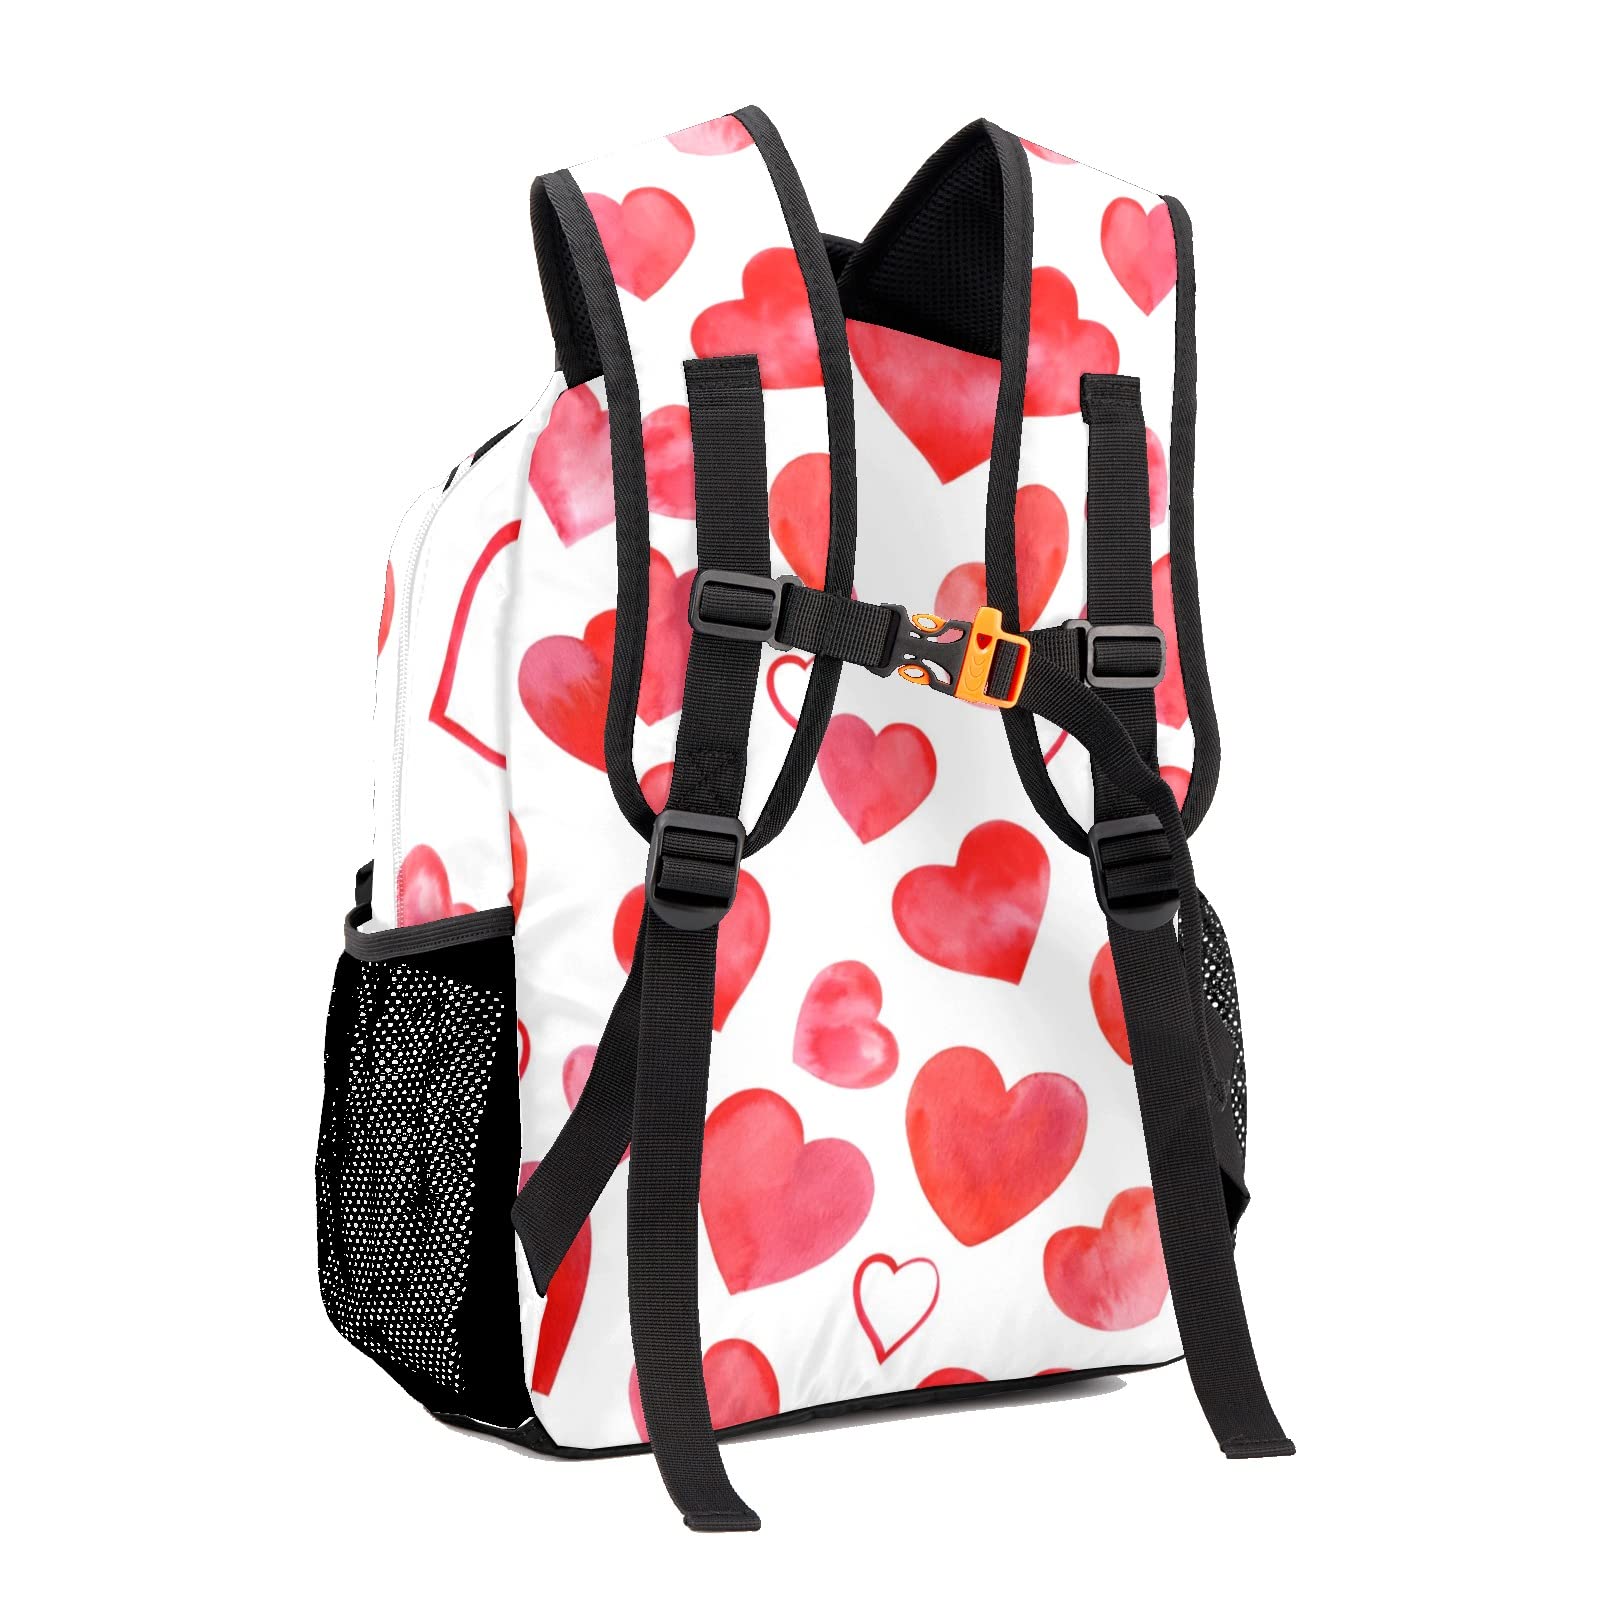 BEYODD Custom Kids Backpack, Personalized Student School Bags for Boys & Girls, Bookbags for Travel Red Hearts Black Girl